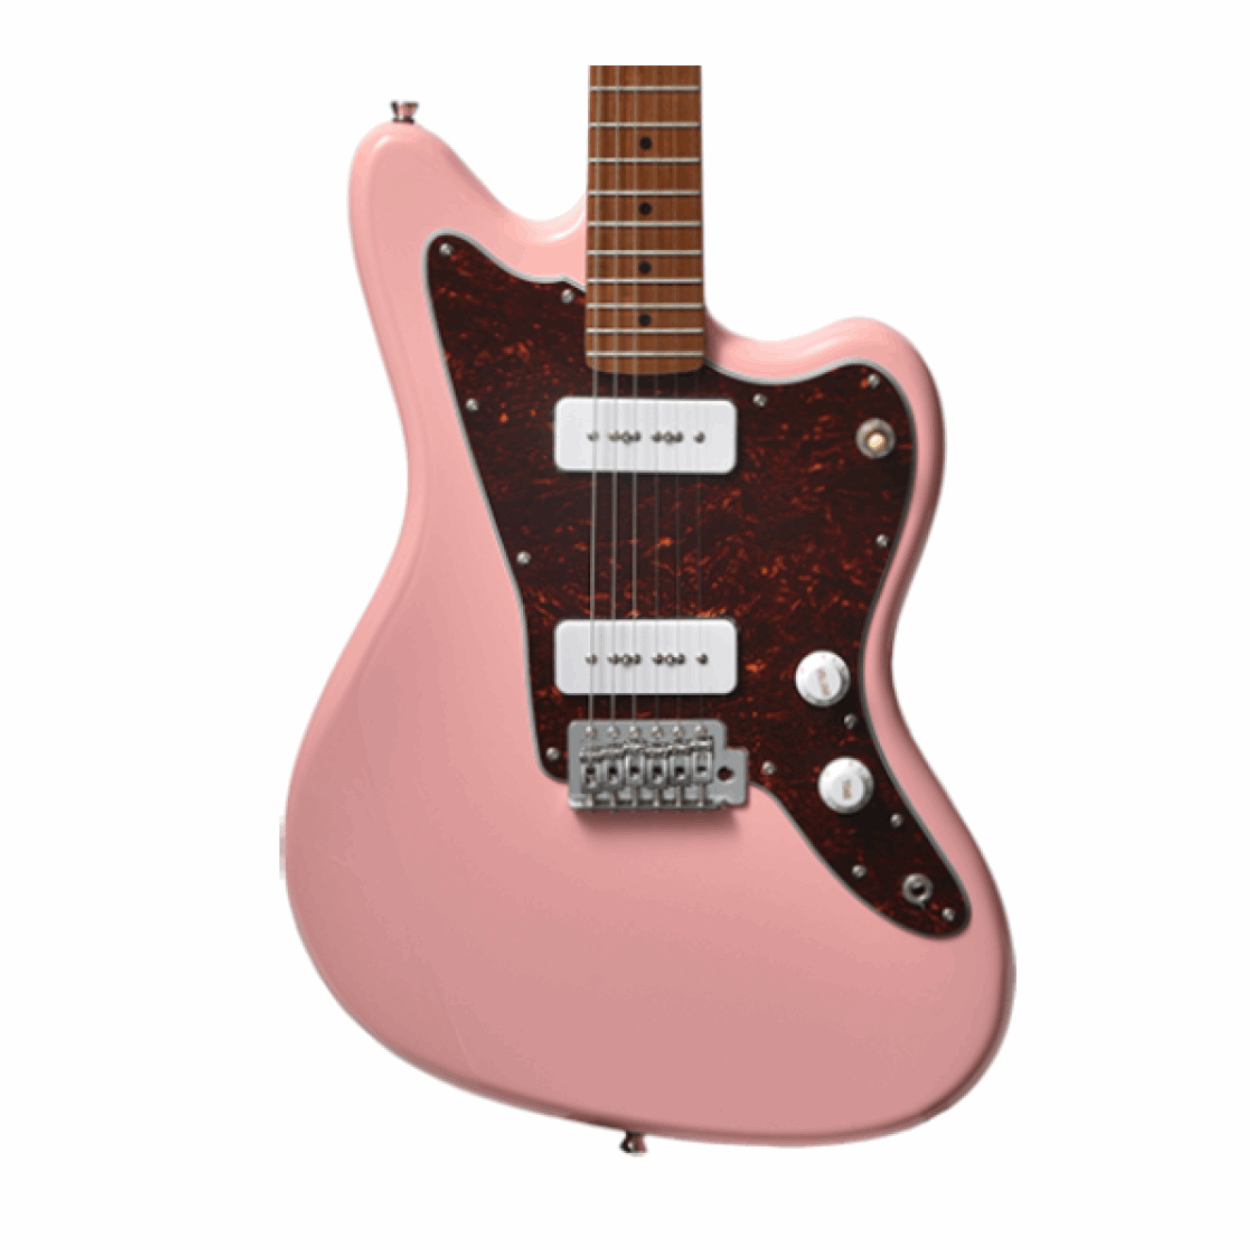 Bacchus Bjm-1rsm/m-slpk Universe Series Roasted Maple Electric Guitar, Shell Pink With Bag